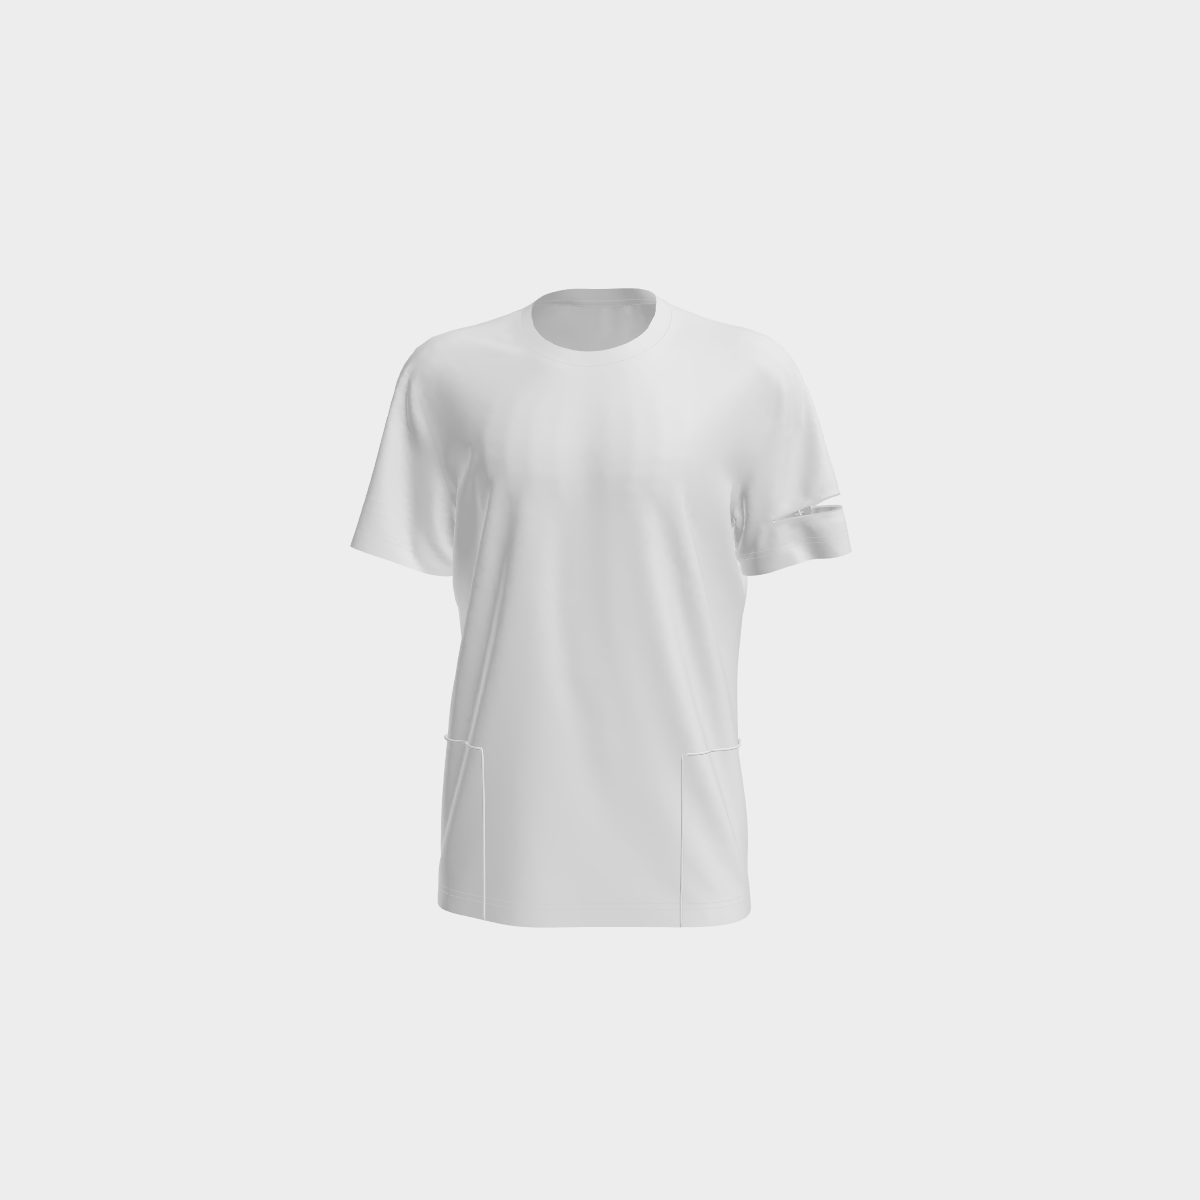 High Quality Printed streetwear Oversized t shirt graphic 100% cotton mens Custom tshirt printing